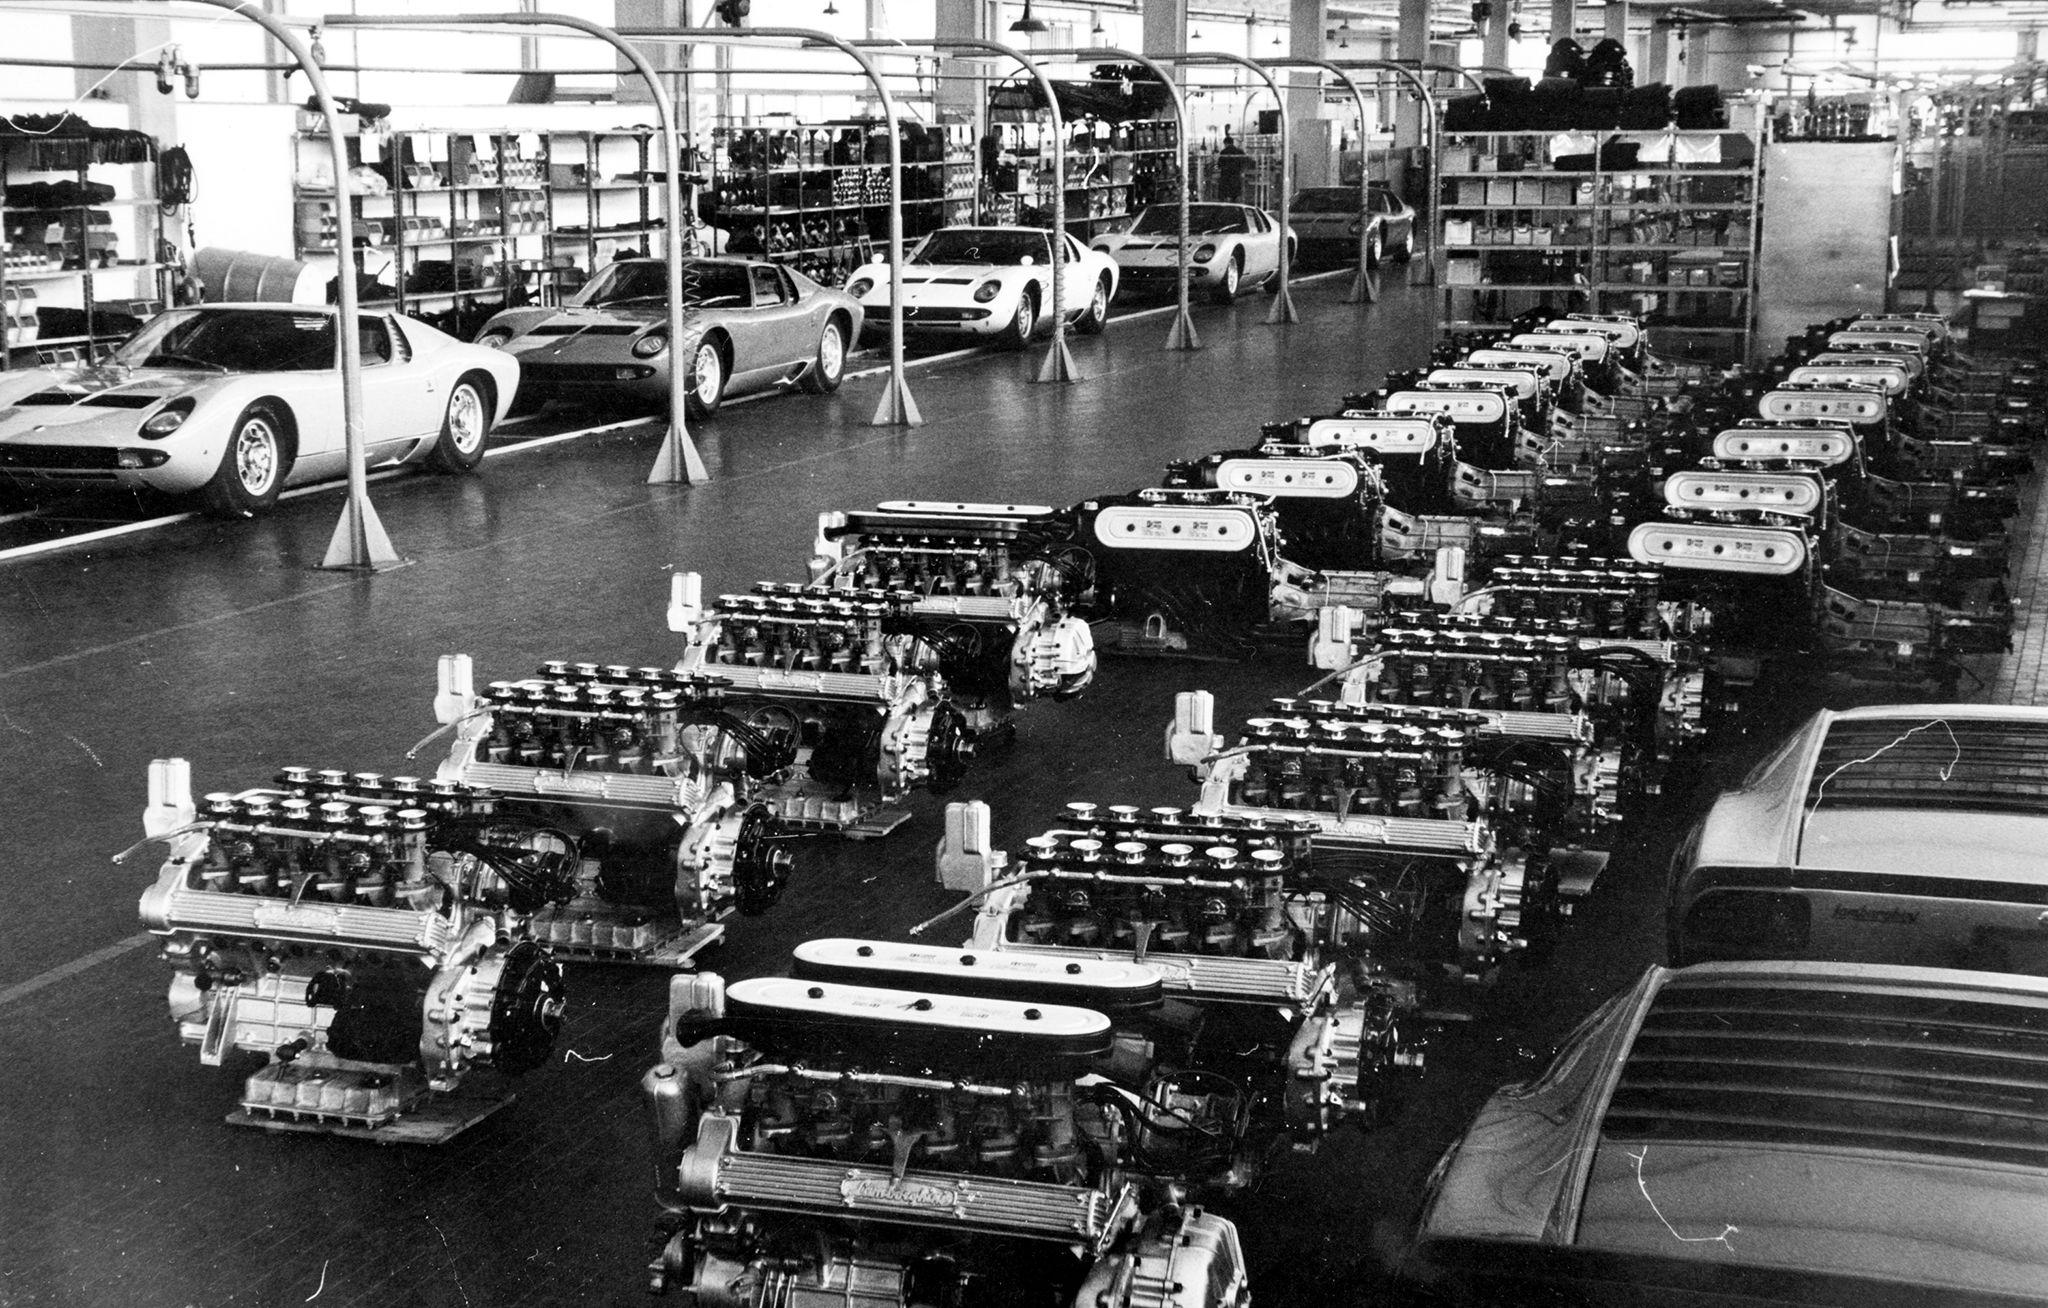 Automobili Lamborghini Factory and Production Turn 60